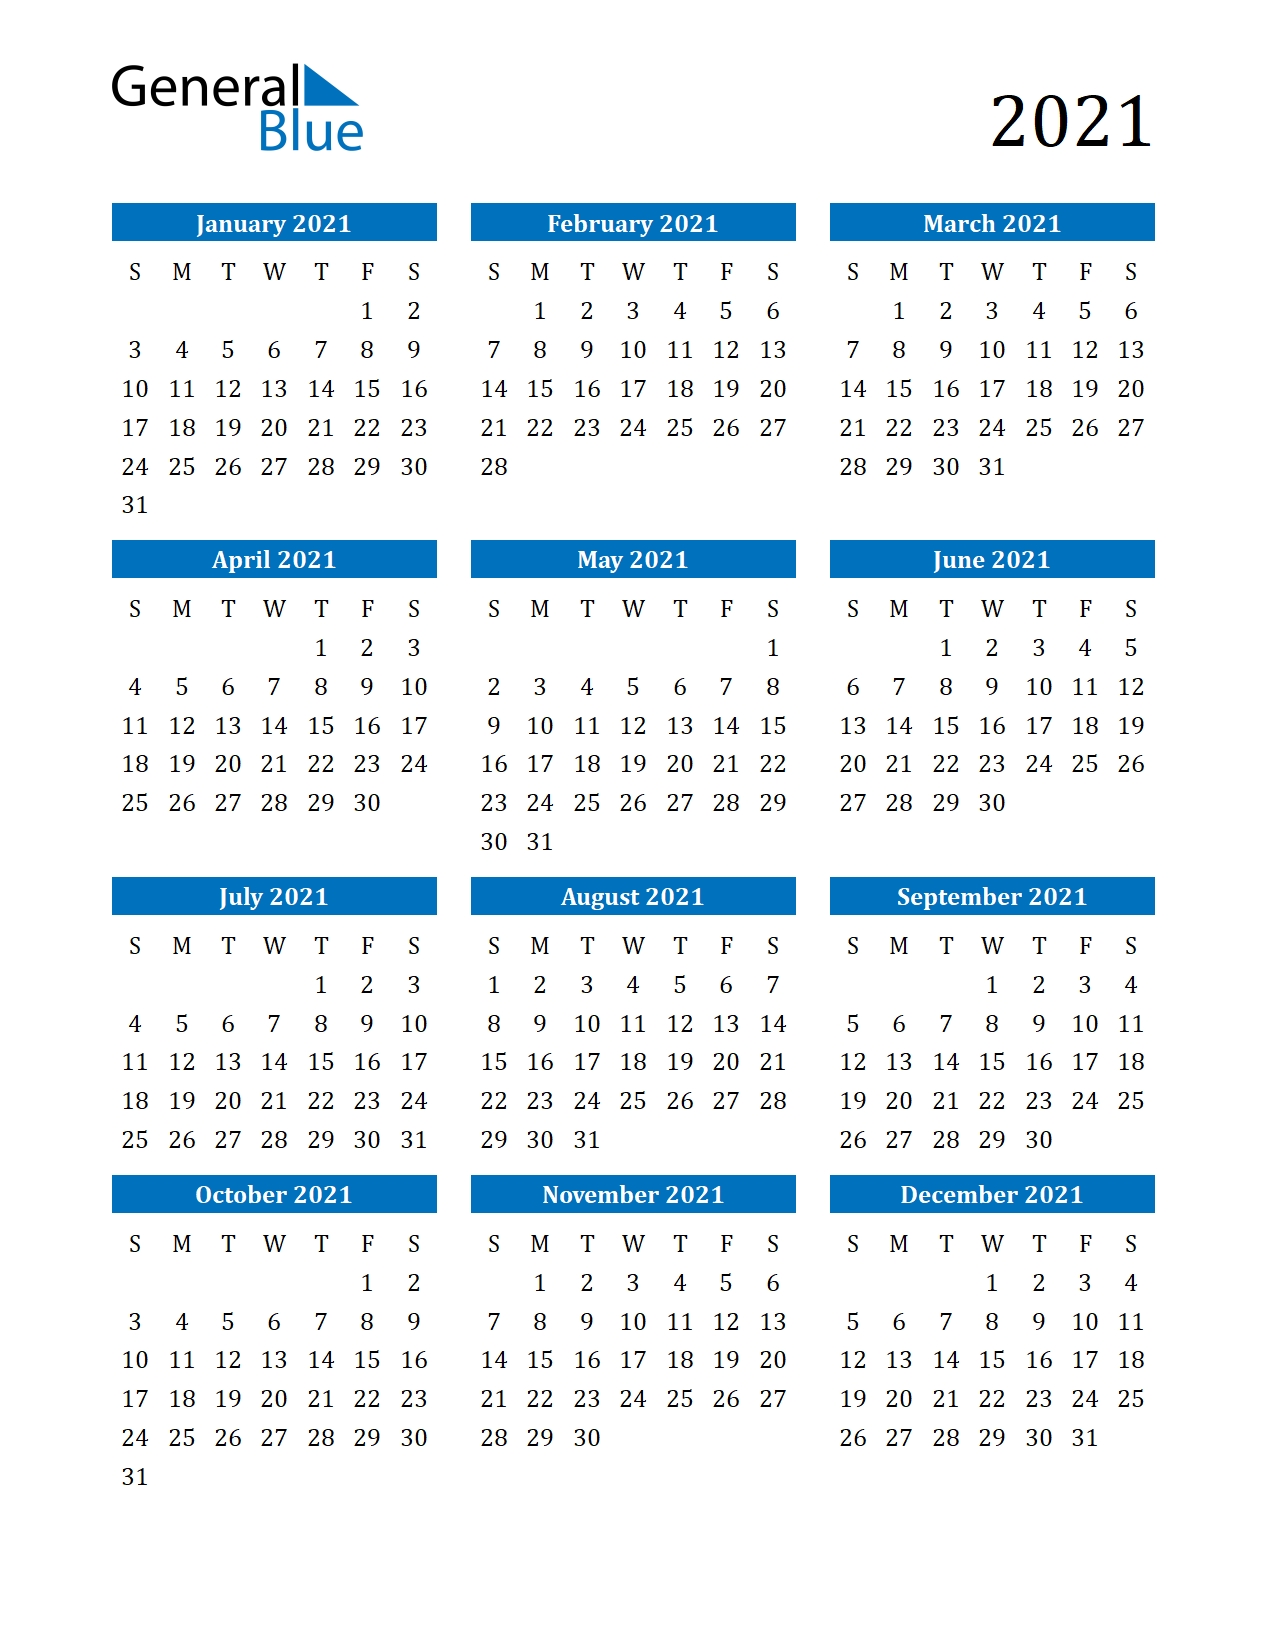 Get 2021 Free Printable Calendar August Through Decemeber